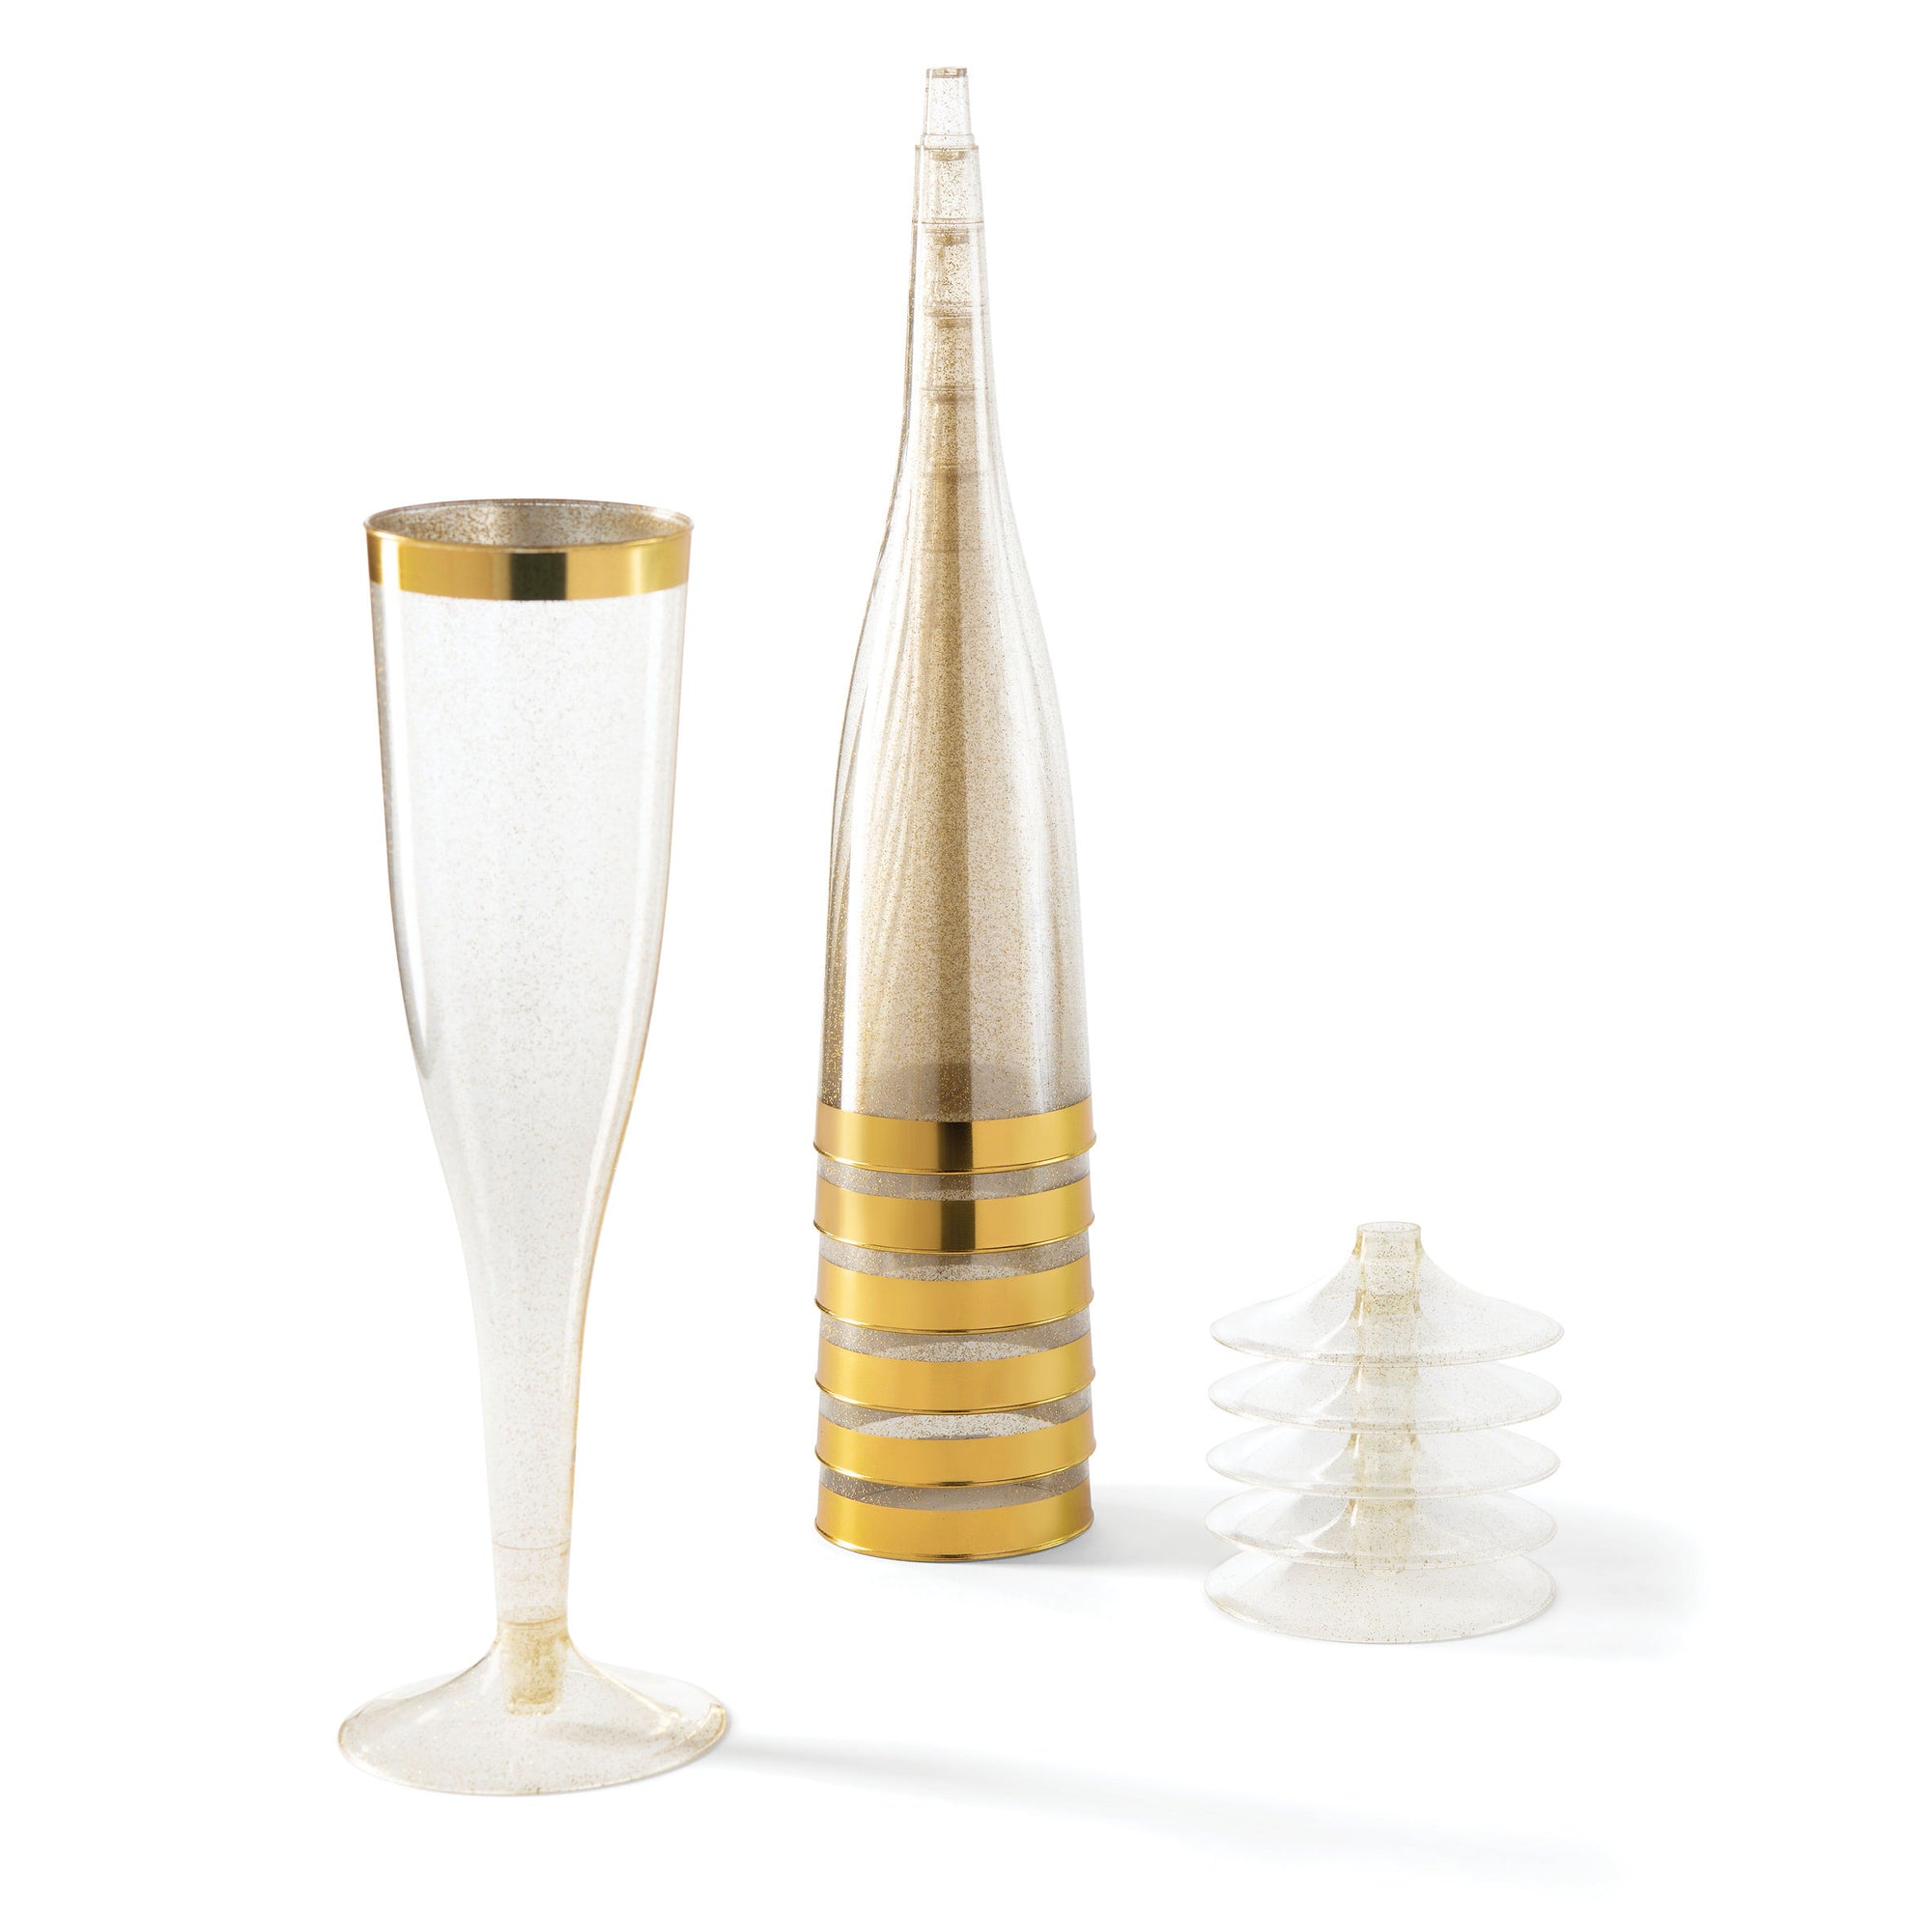 Plastic Champagne Flutes Disposable - Silver Glitter with A Silver Rim - [1 Box of 36 ] 6.5 oz - Premium Toasting Glass - Elegant Stylish Mimosa